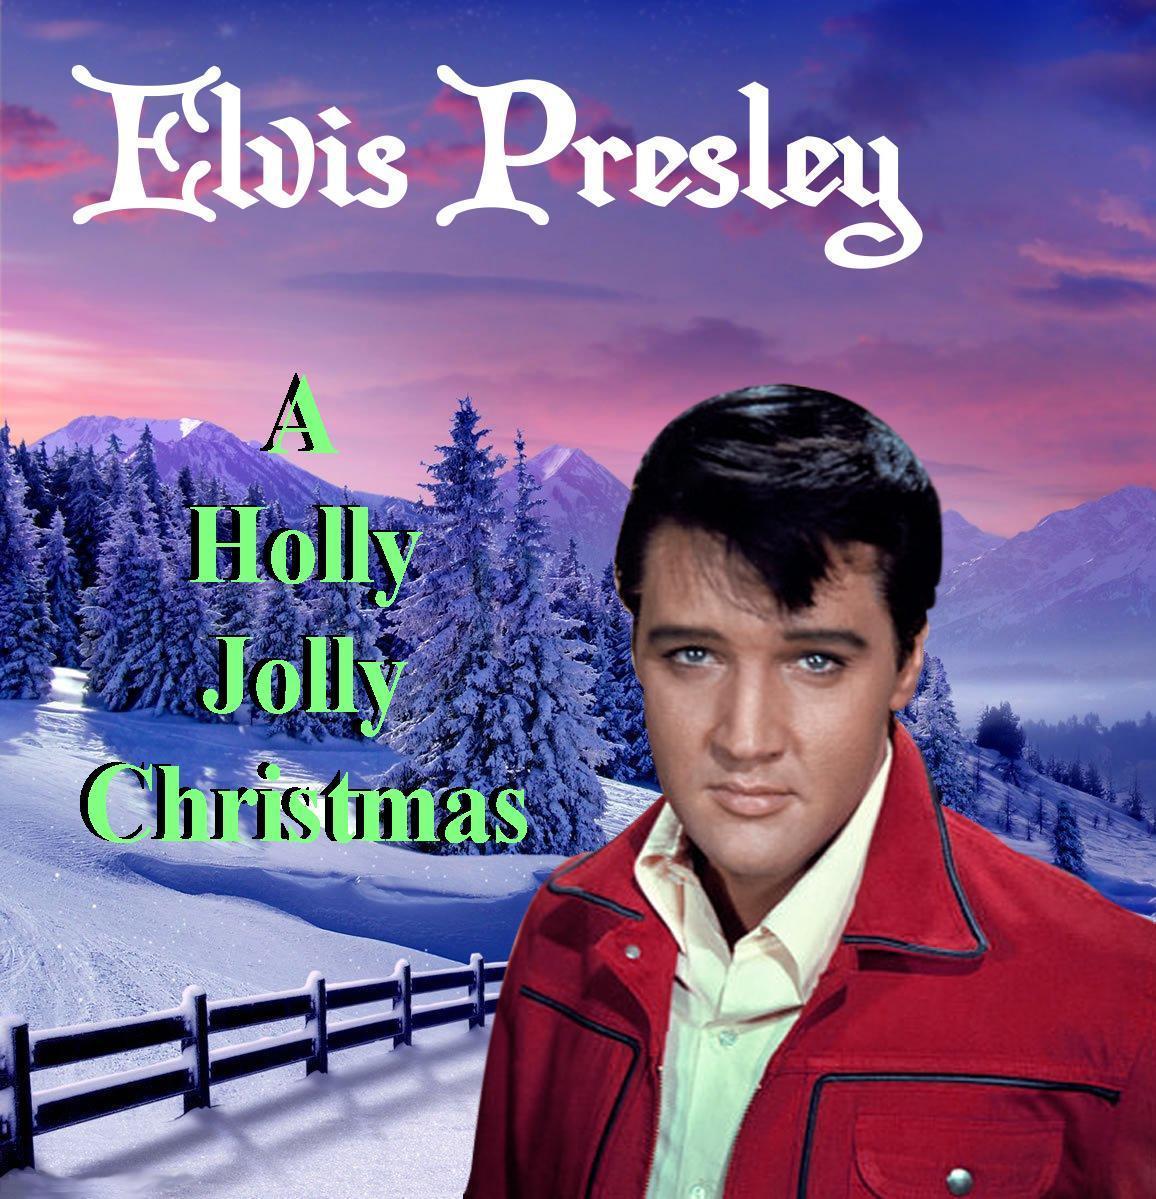 Elvis Impersonators Presley A Holly Jolly Christmas Dj